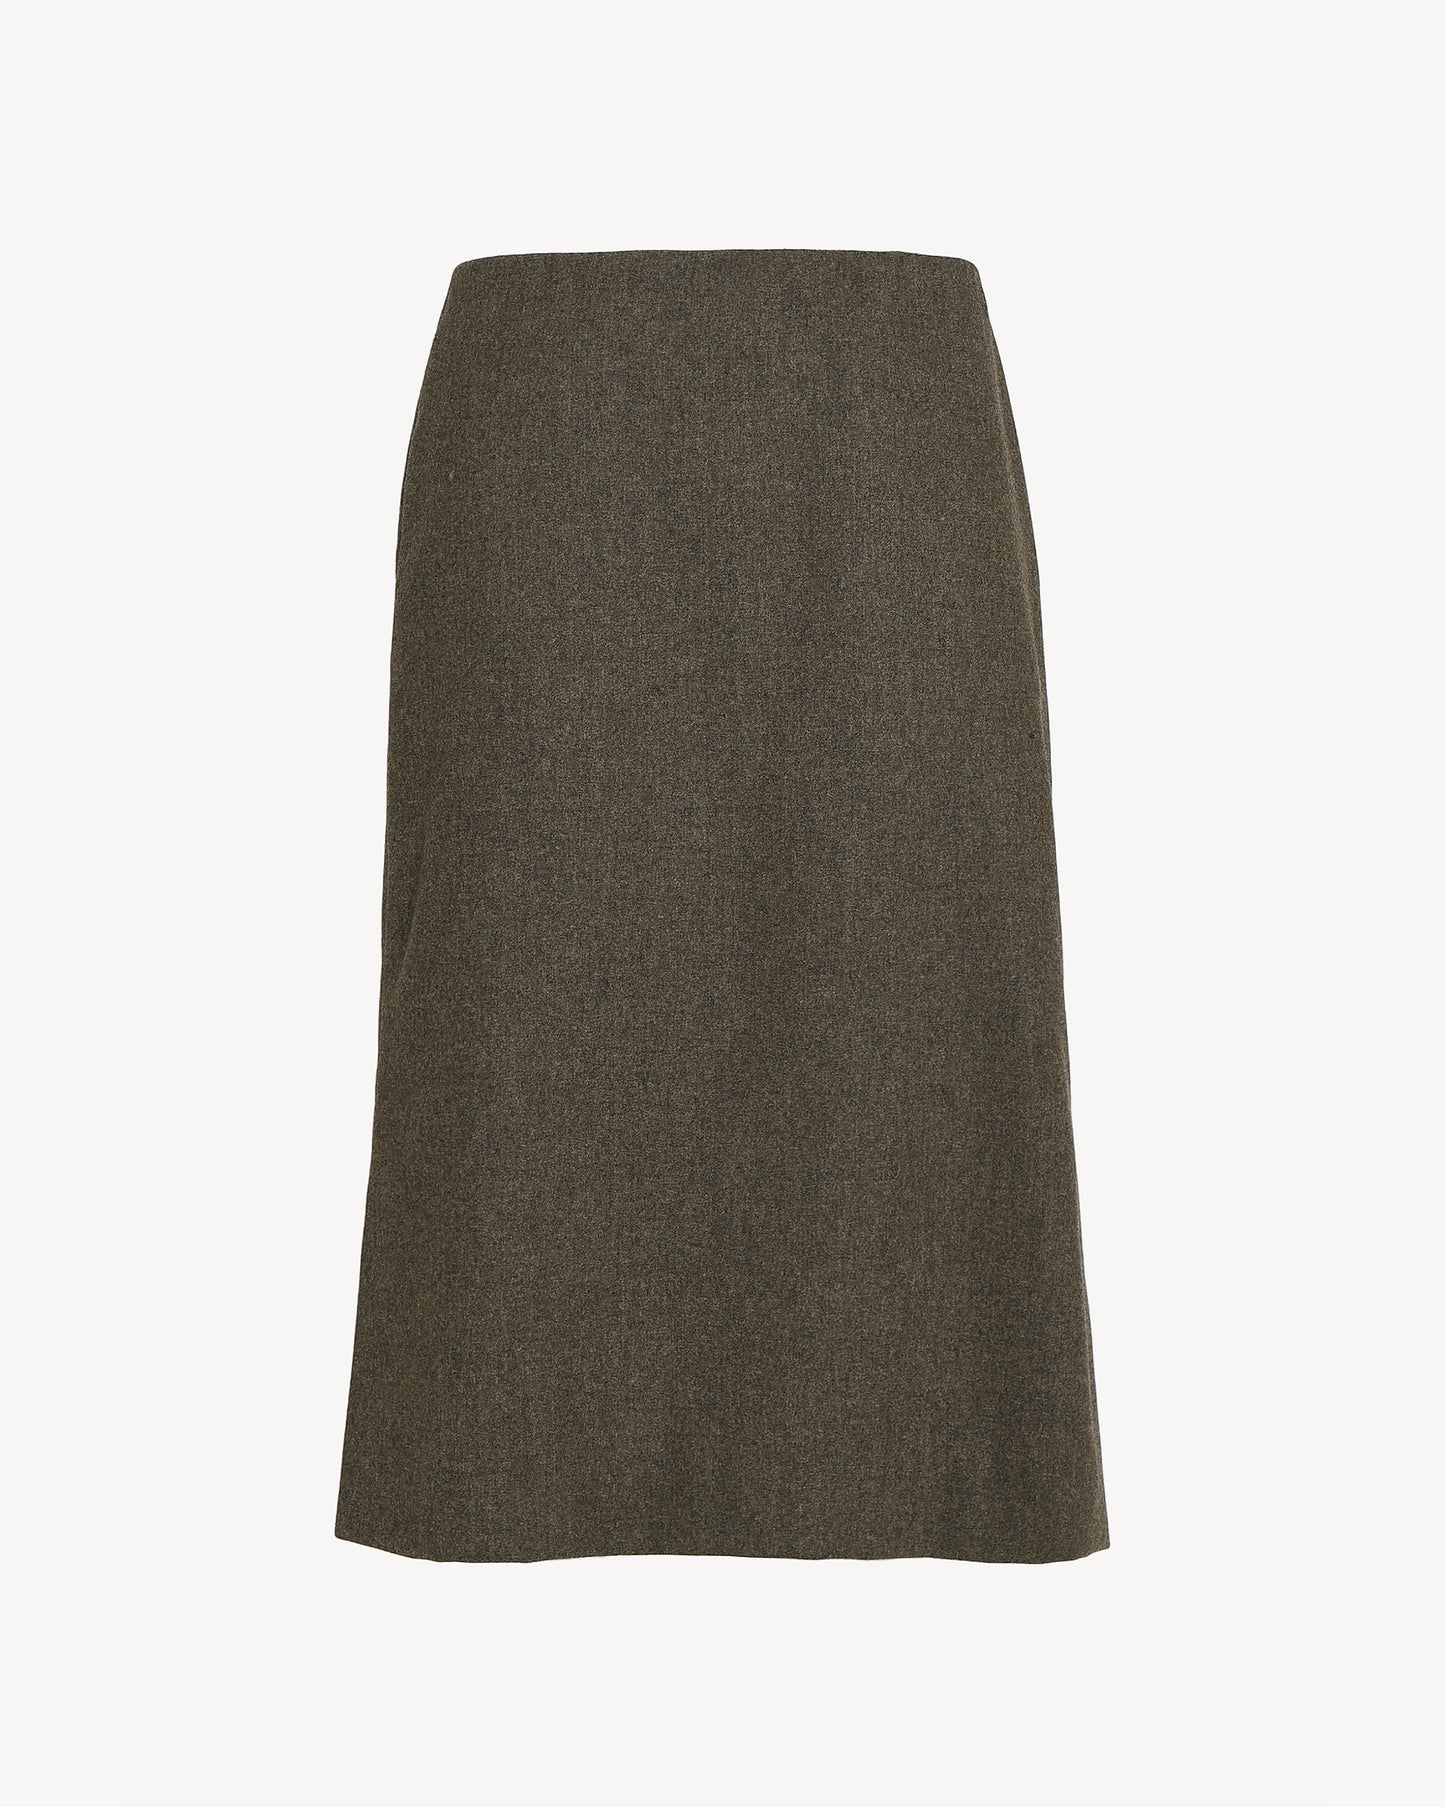 Issue Twelve Uma Skirt in Wool Cashmere Moss Green 